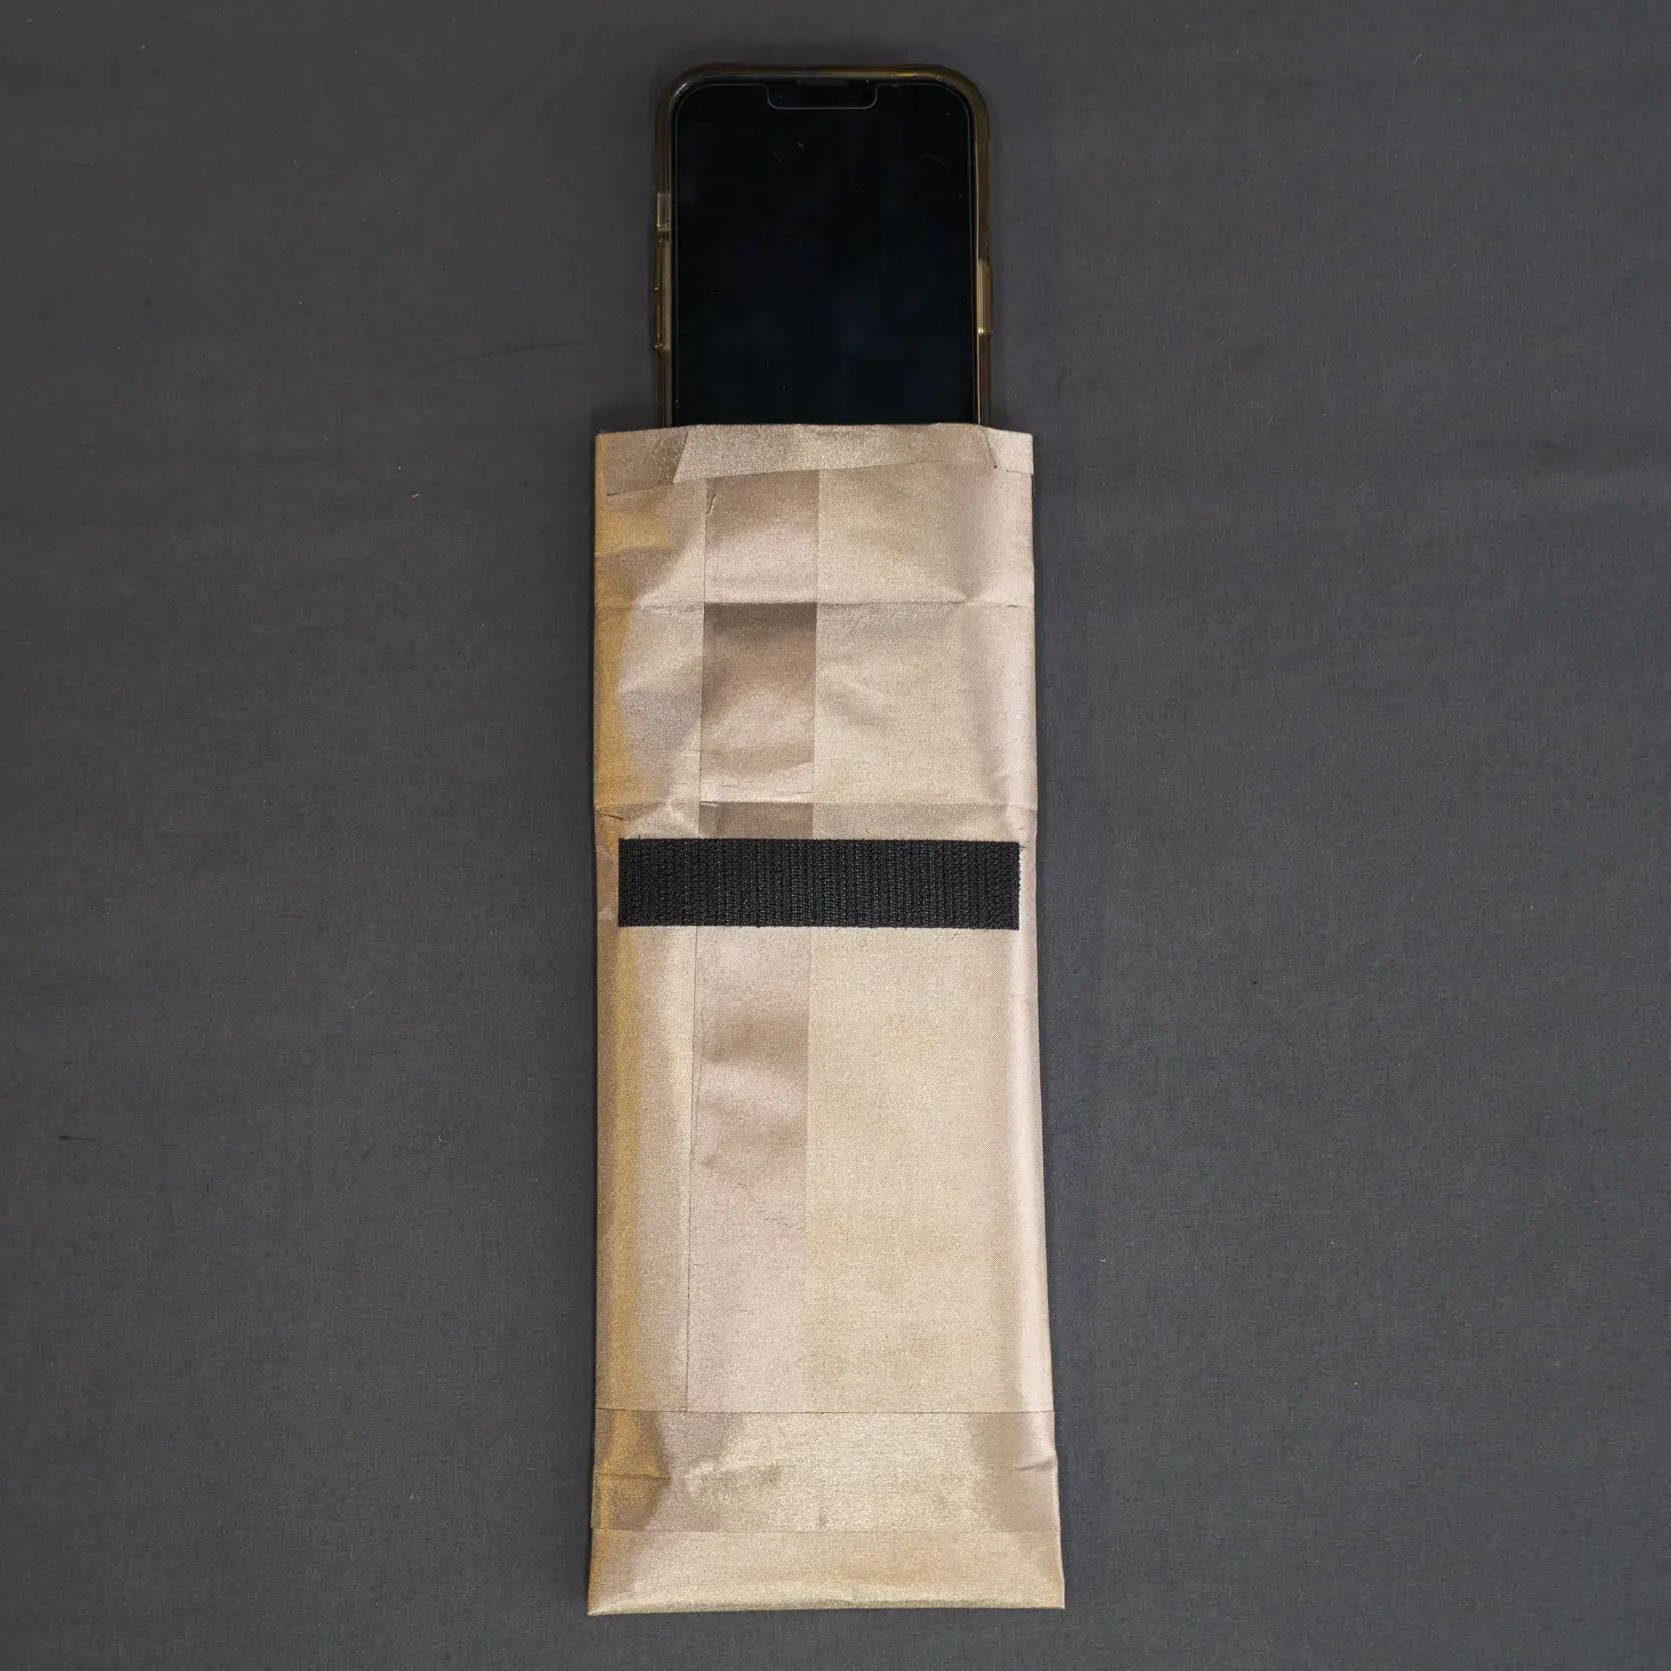 Handmade faraday sleeve crafted from TitanRF Faraday fabric and TitanRF Faraday Tape